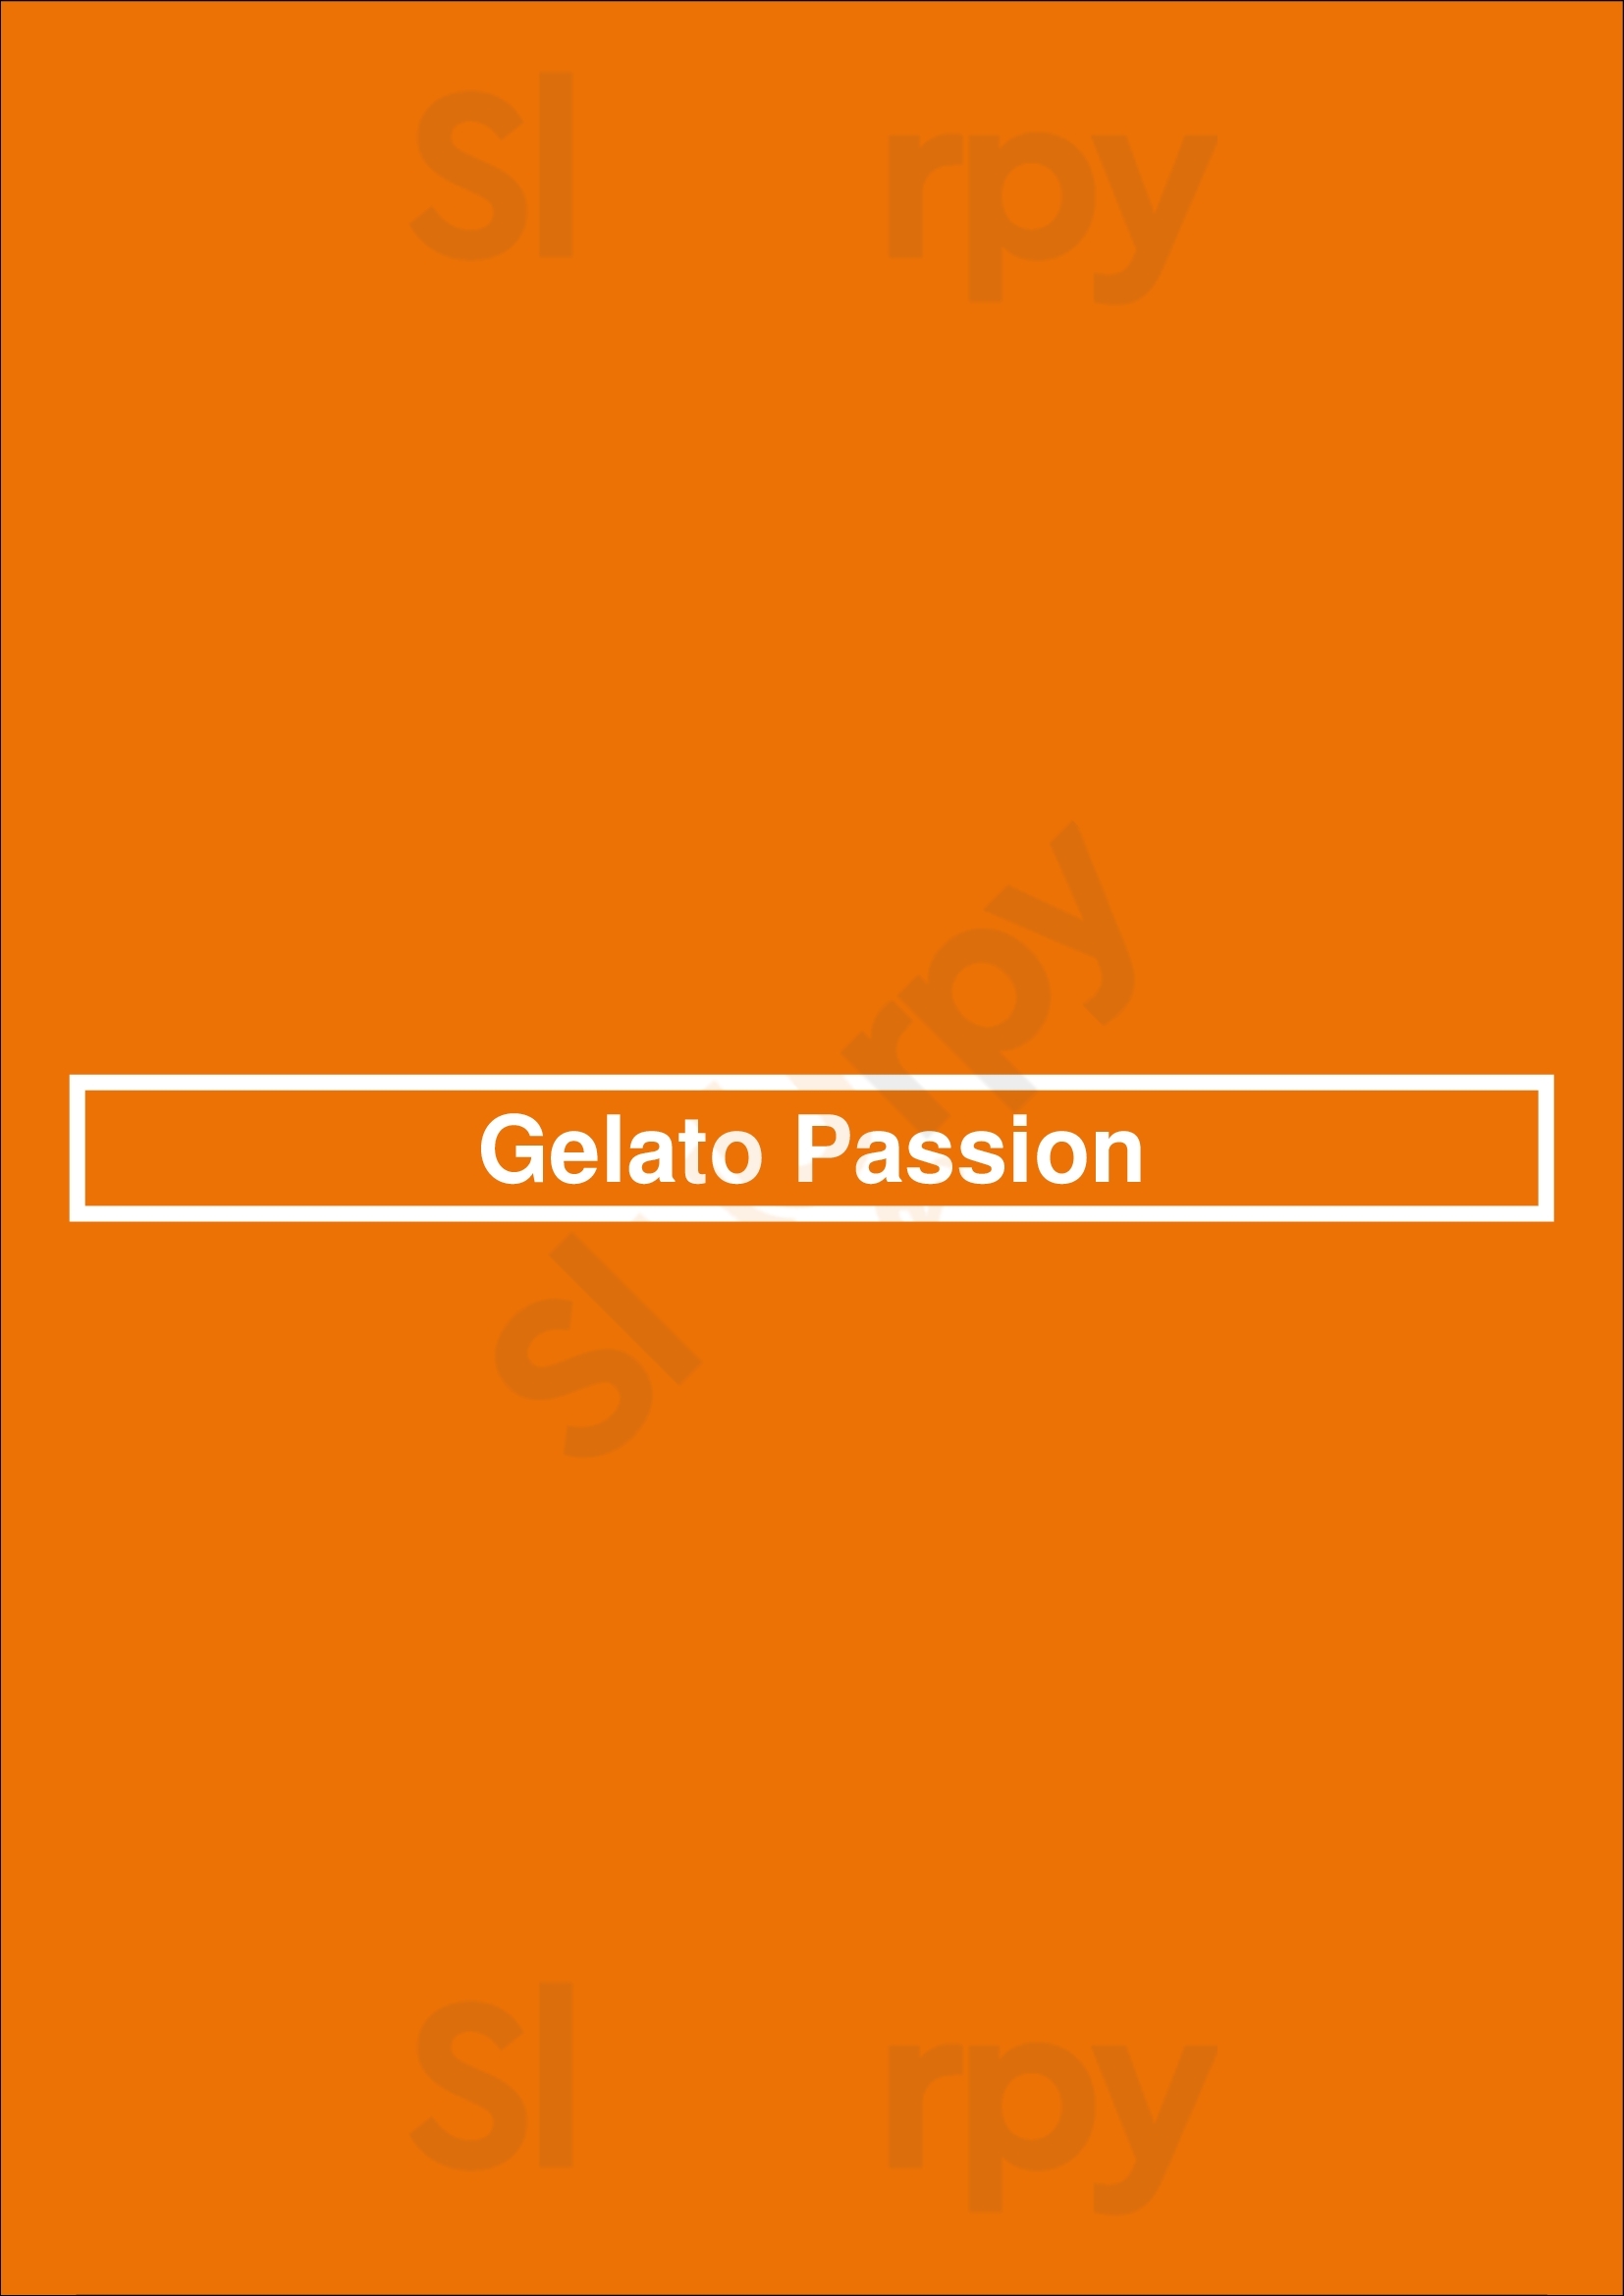 Gelato Passion Sheffield Menu - 1